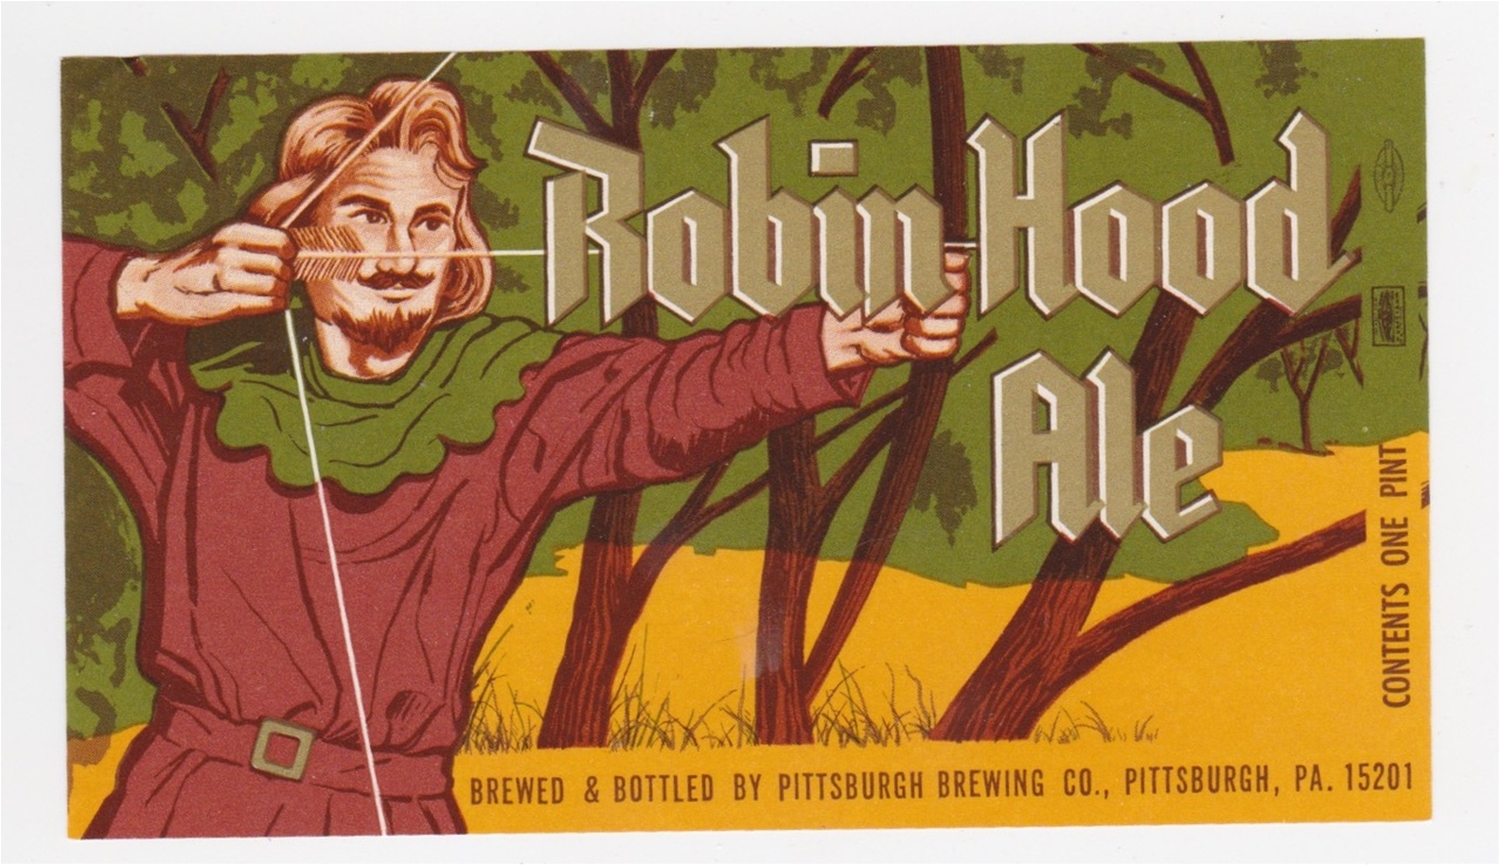 Robin Hood Ale Beer Label